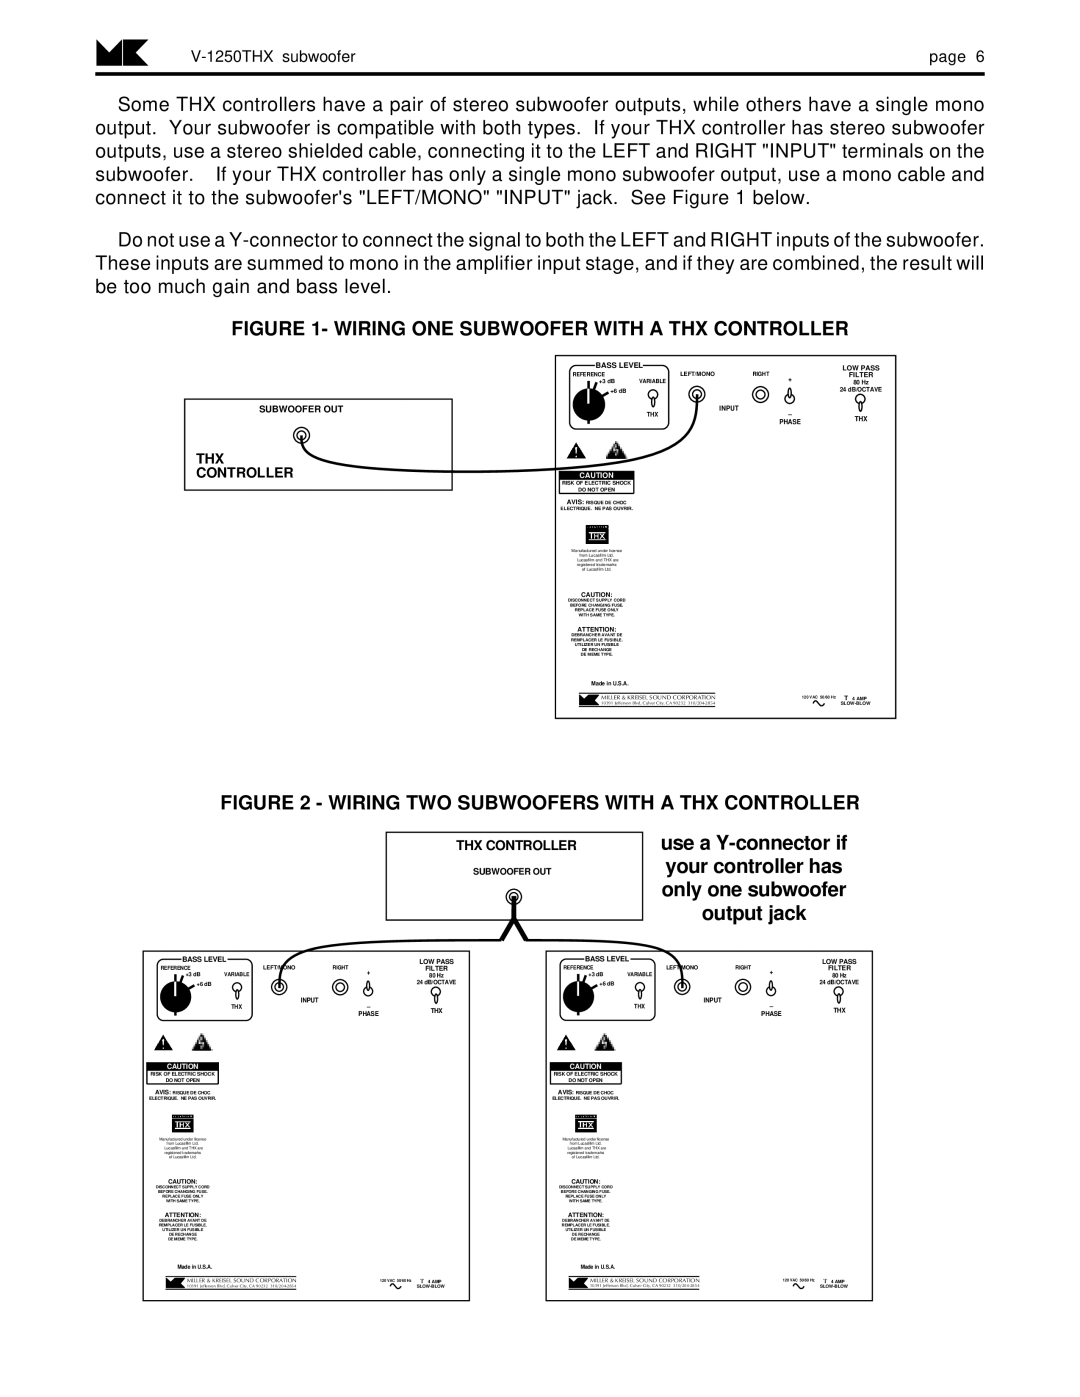 MK Sound V-1250THX operation manual Thx Controller 